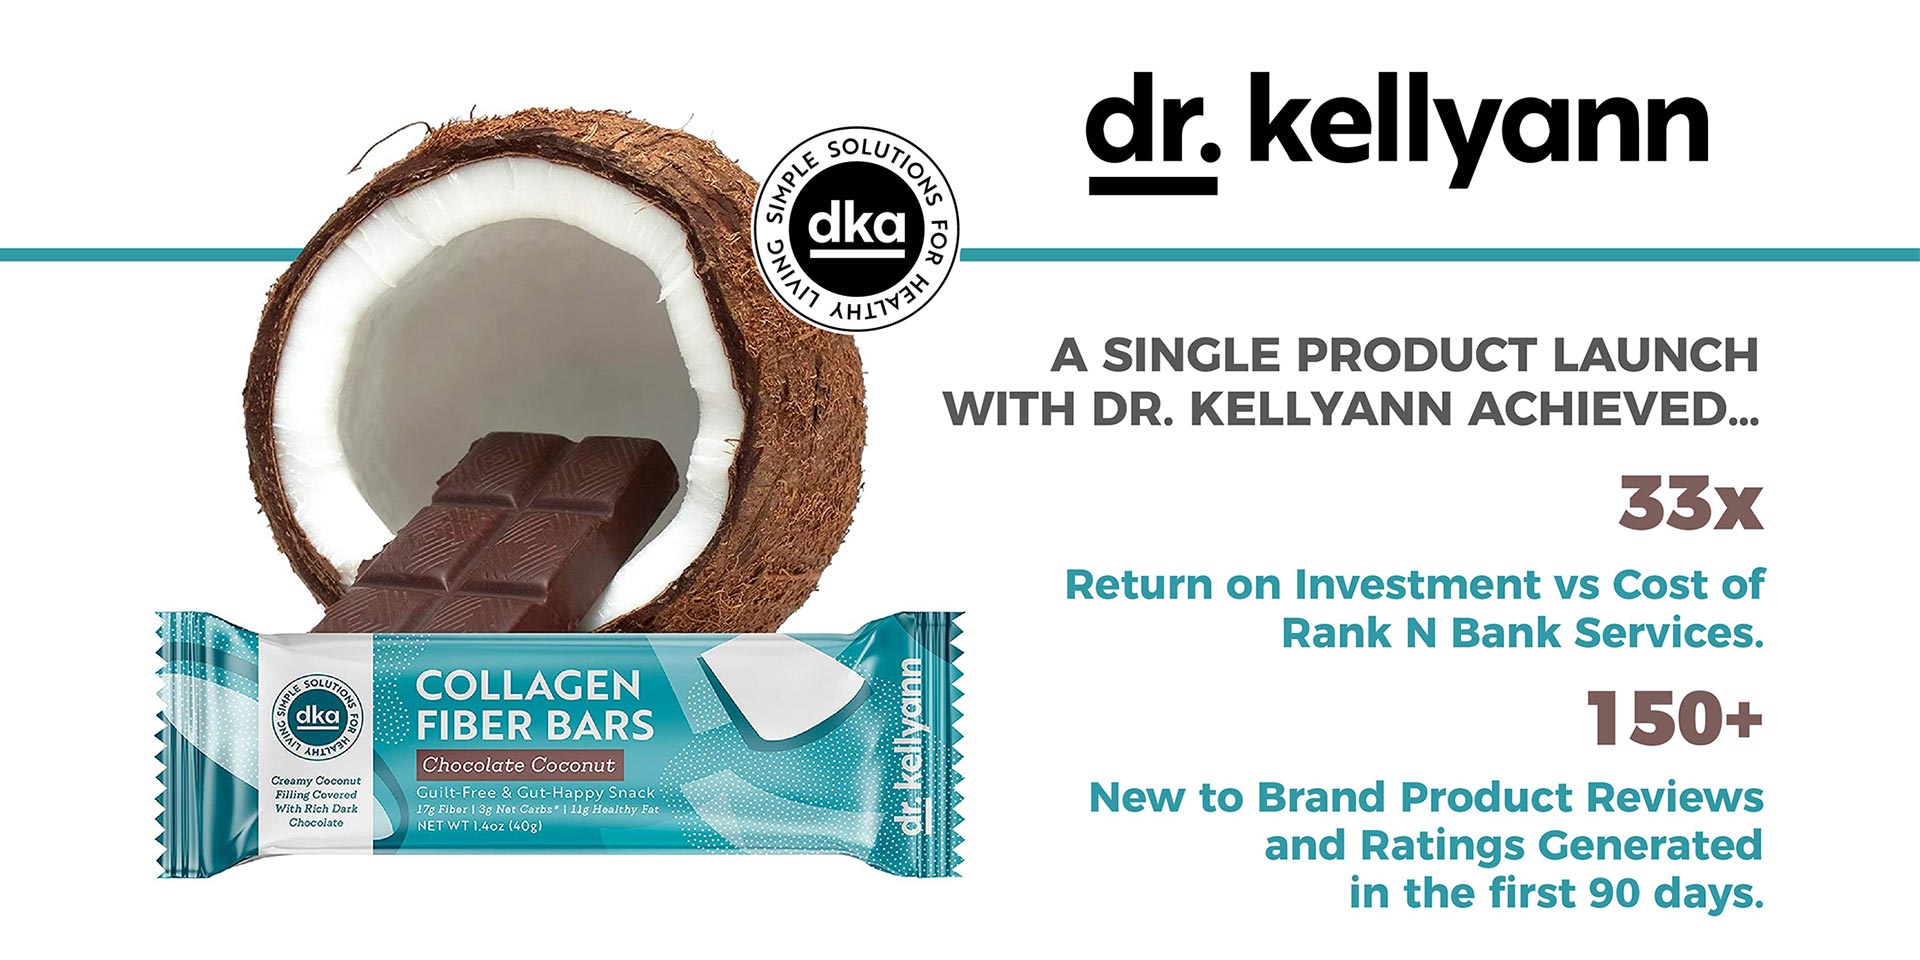 Dr. Kellyann